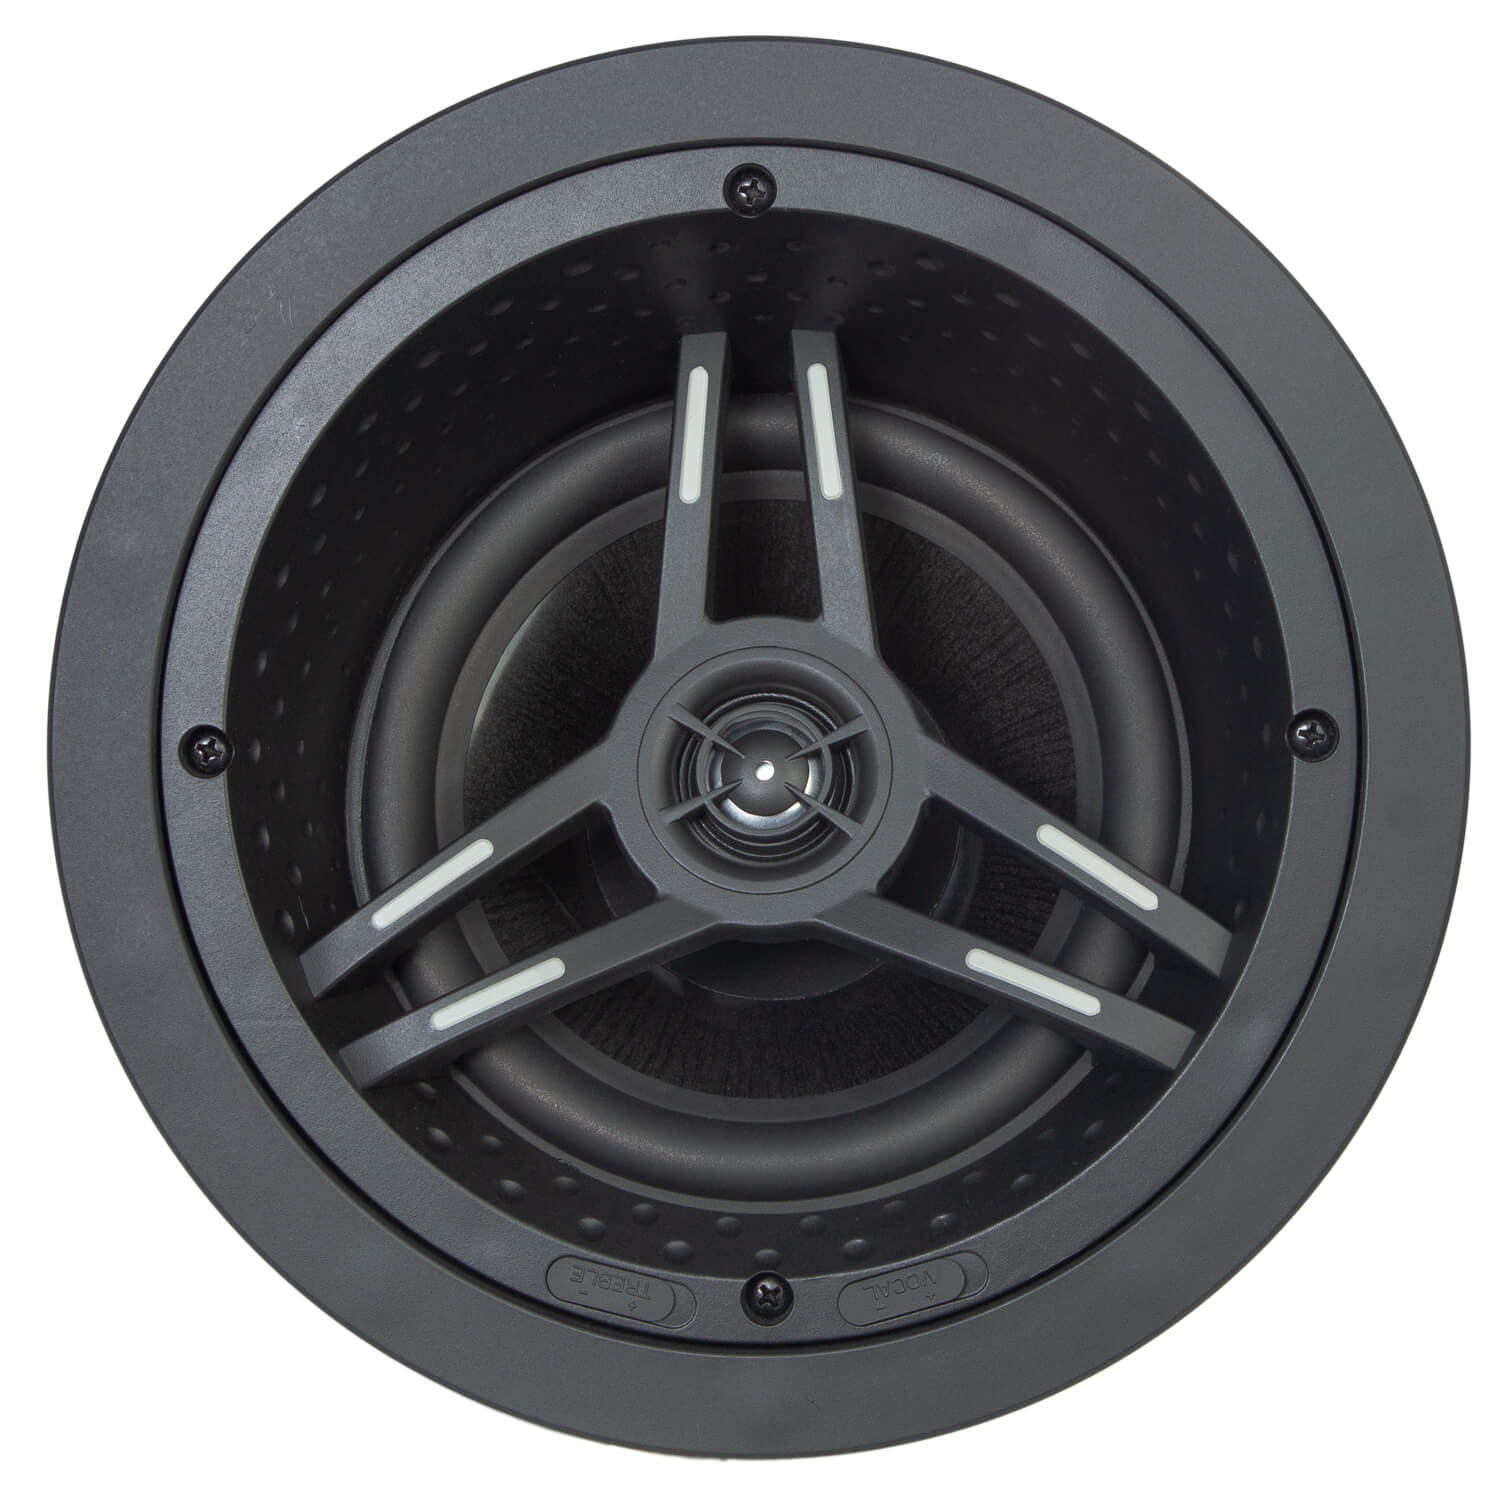 Speakercraft DX-Grand Series- 6 1/2” In-Ceiling LCR Speaker SC-DX-GC6-LCR